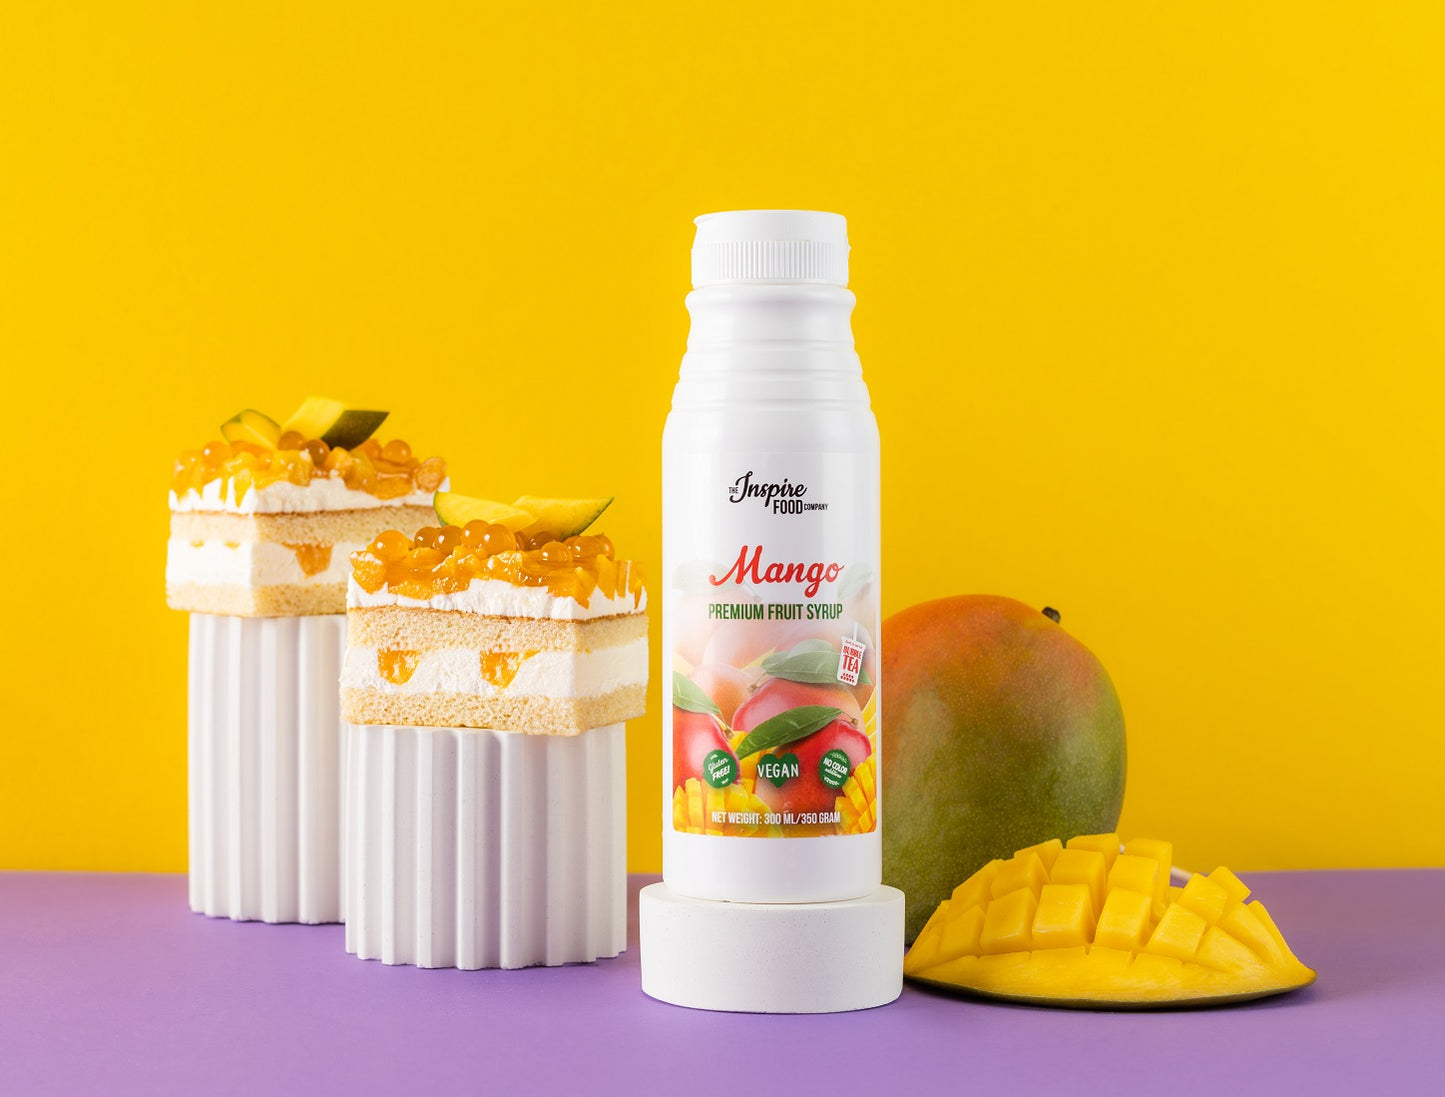 Premium Mango fruitsiroop - geen kleurstoffen- 5 x 2 liter